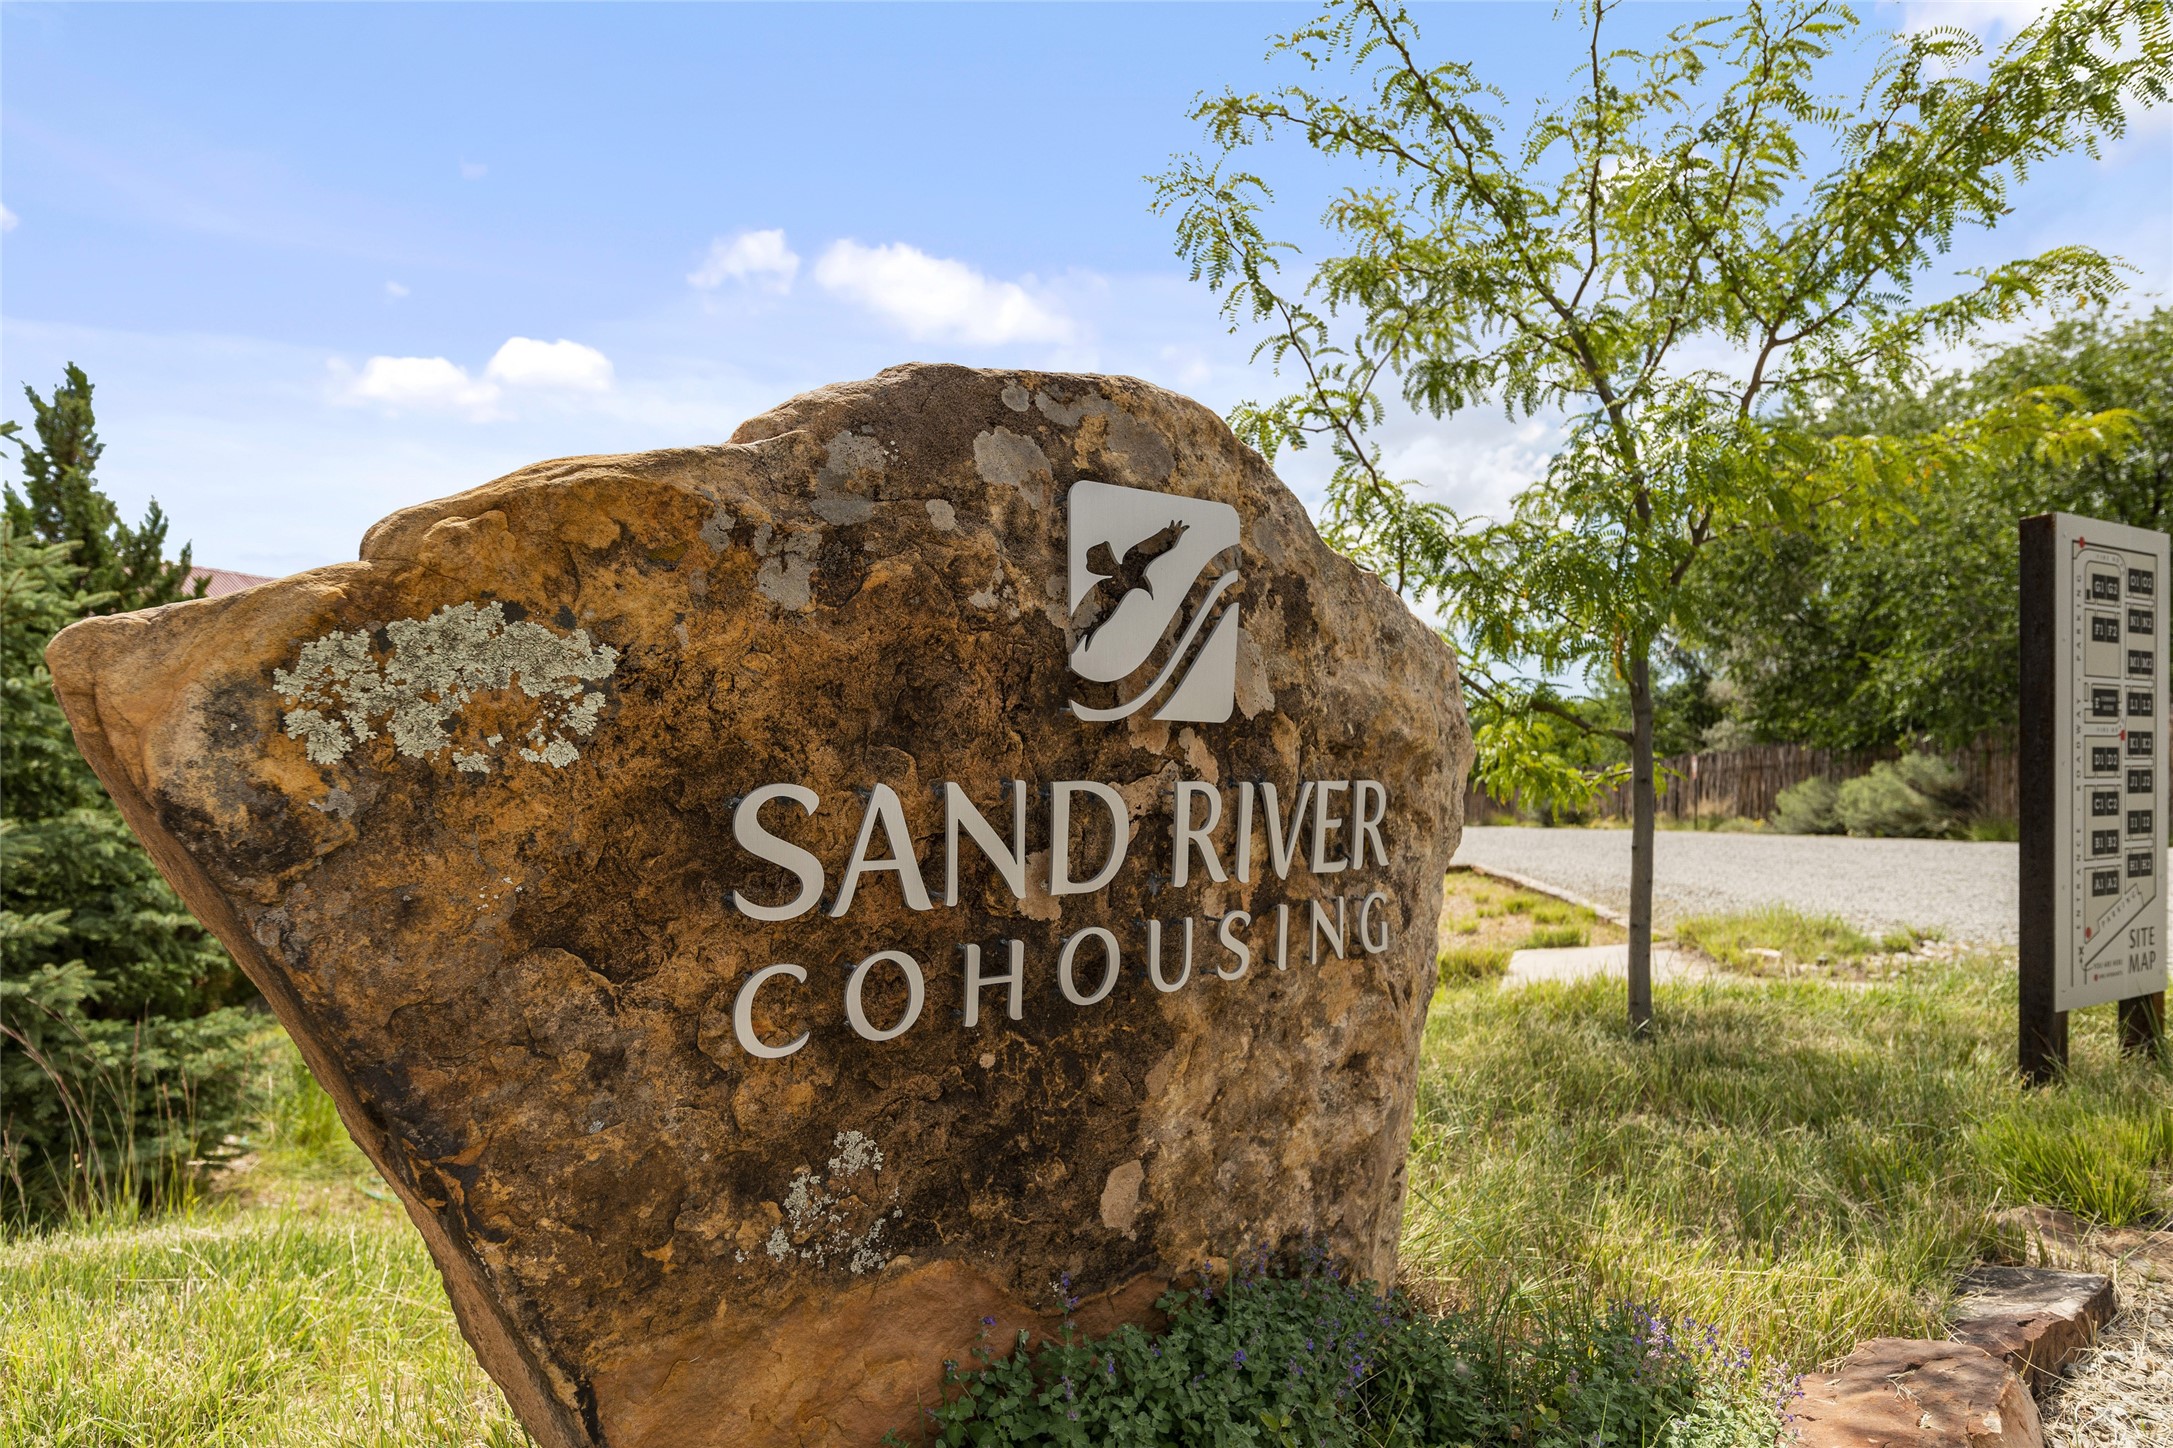 Entrance to Sand River Cohousing